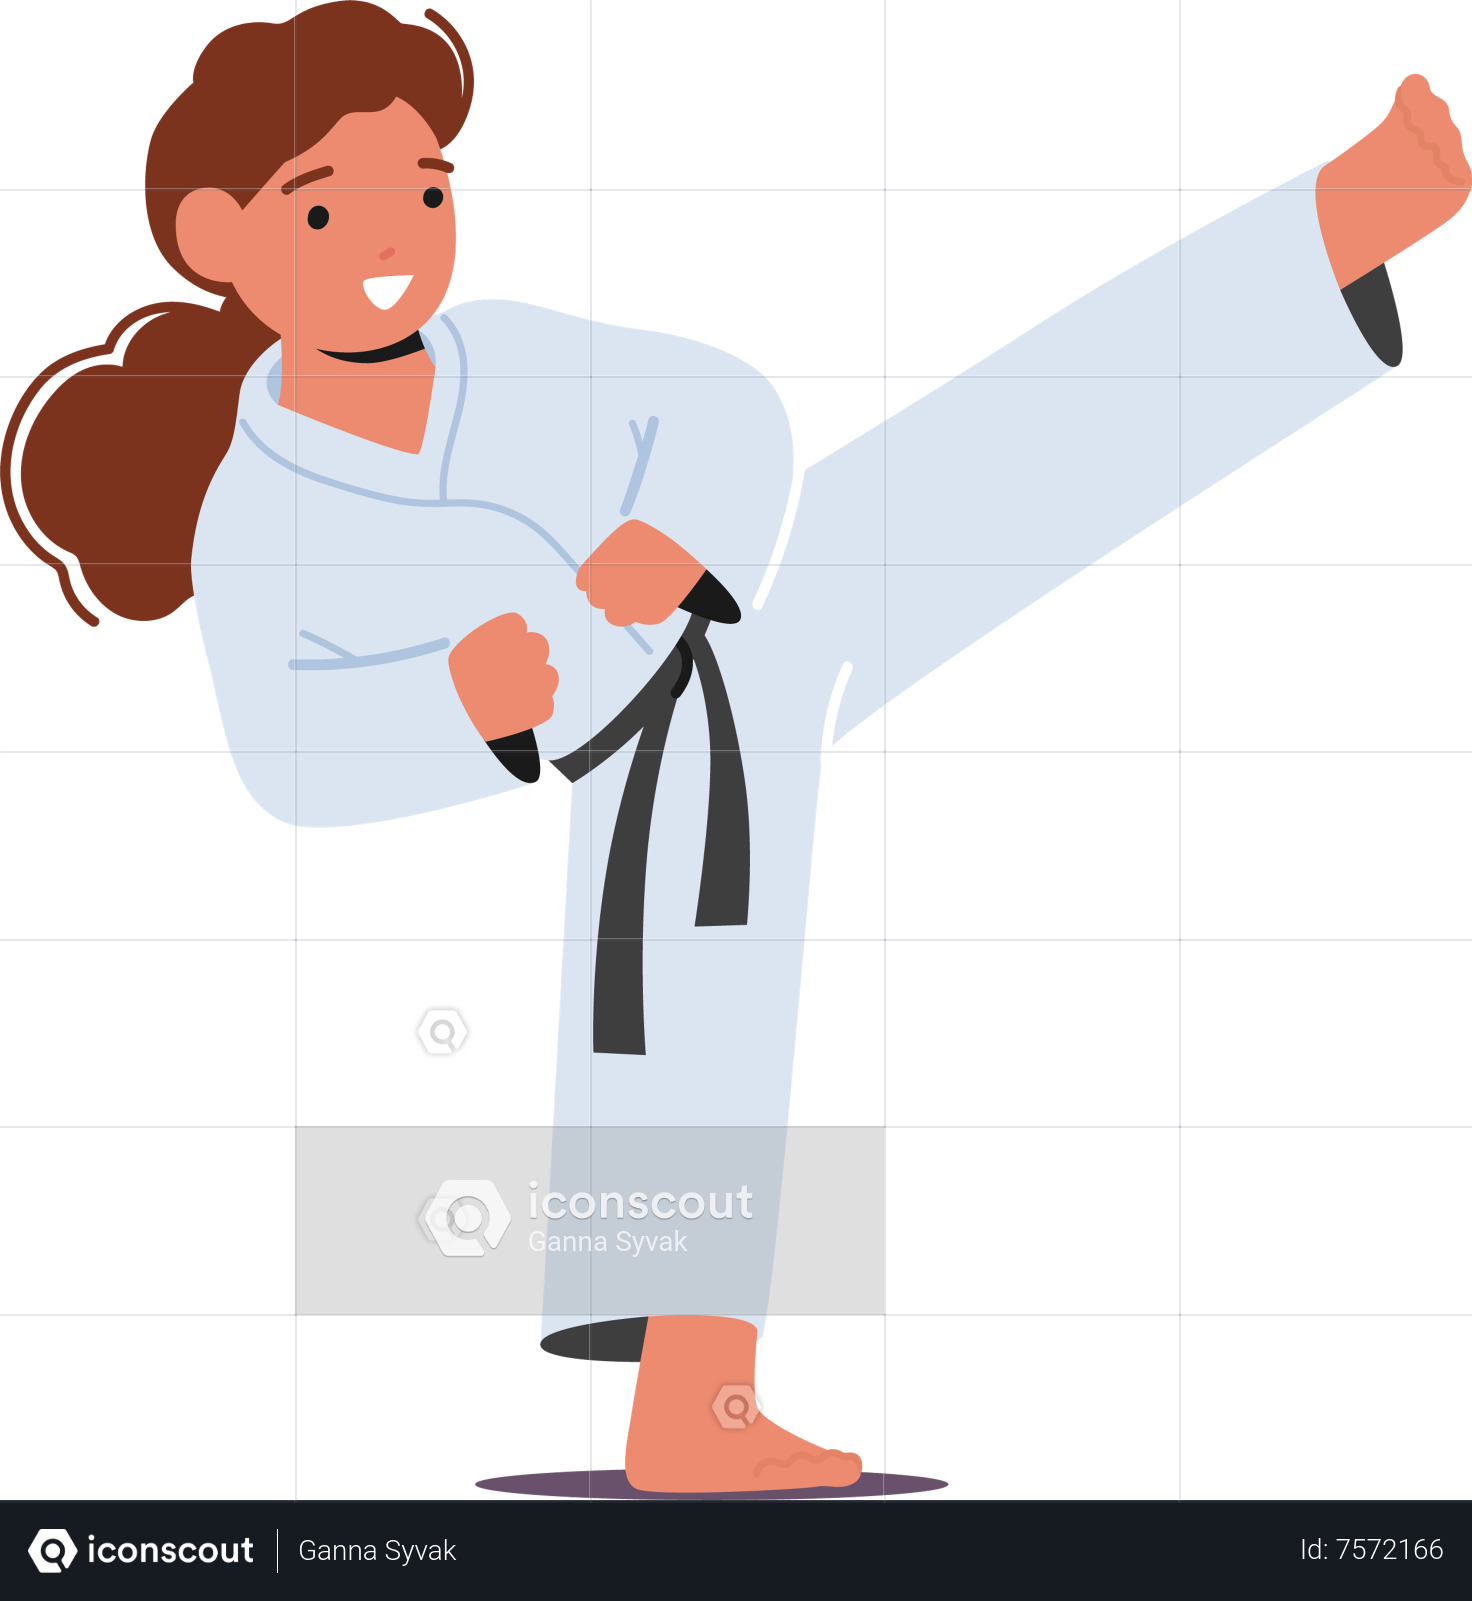 Karate-After long battle, karate gets long-awaited chance on biggest stage  | Reuters